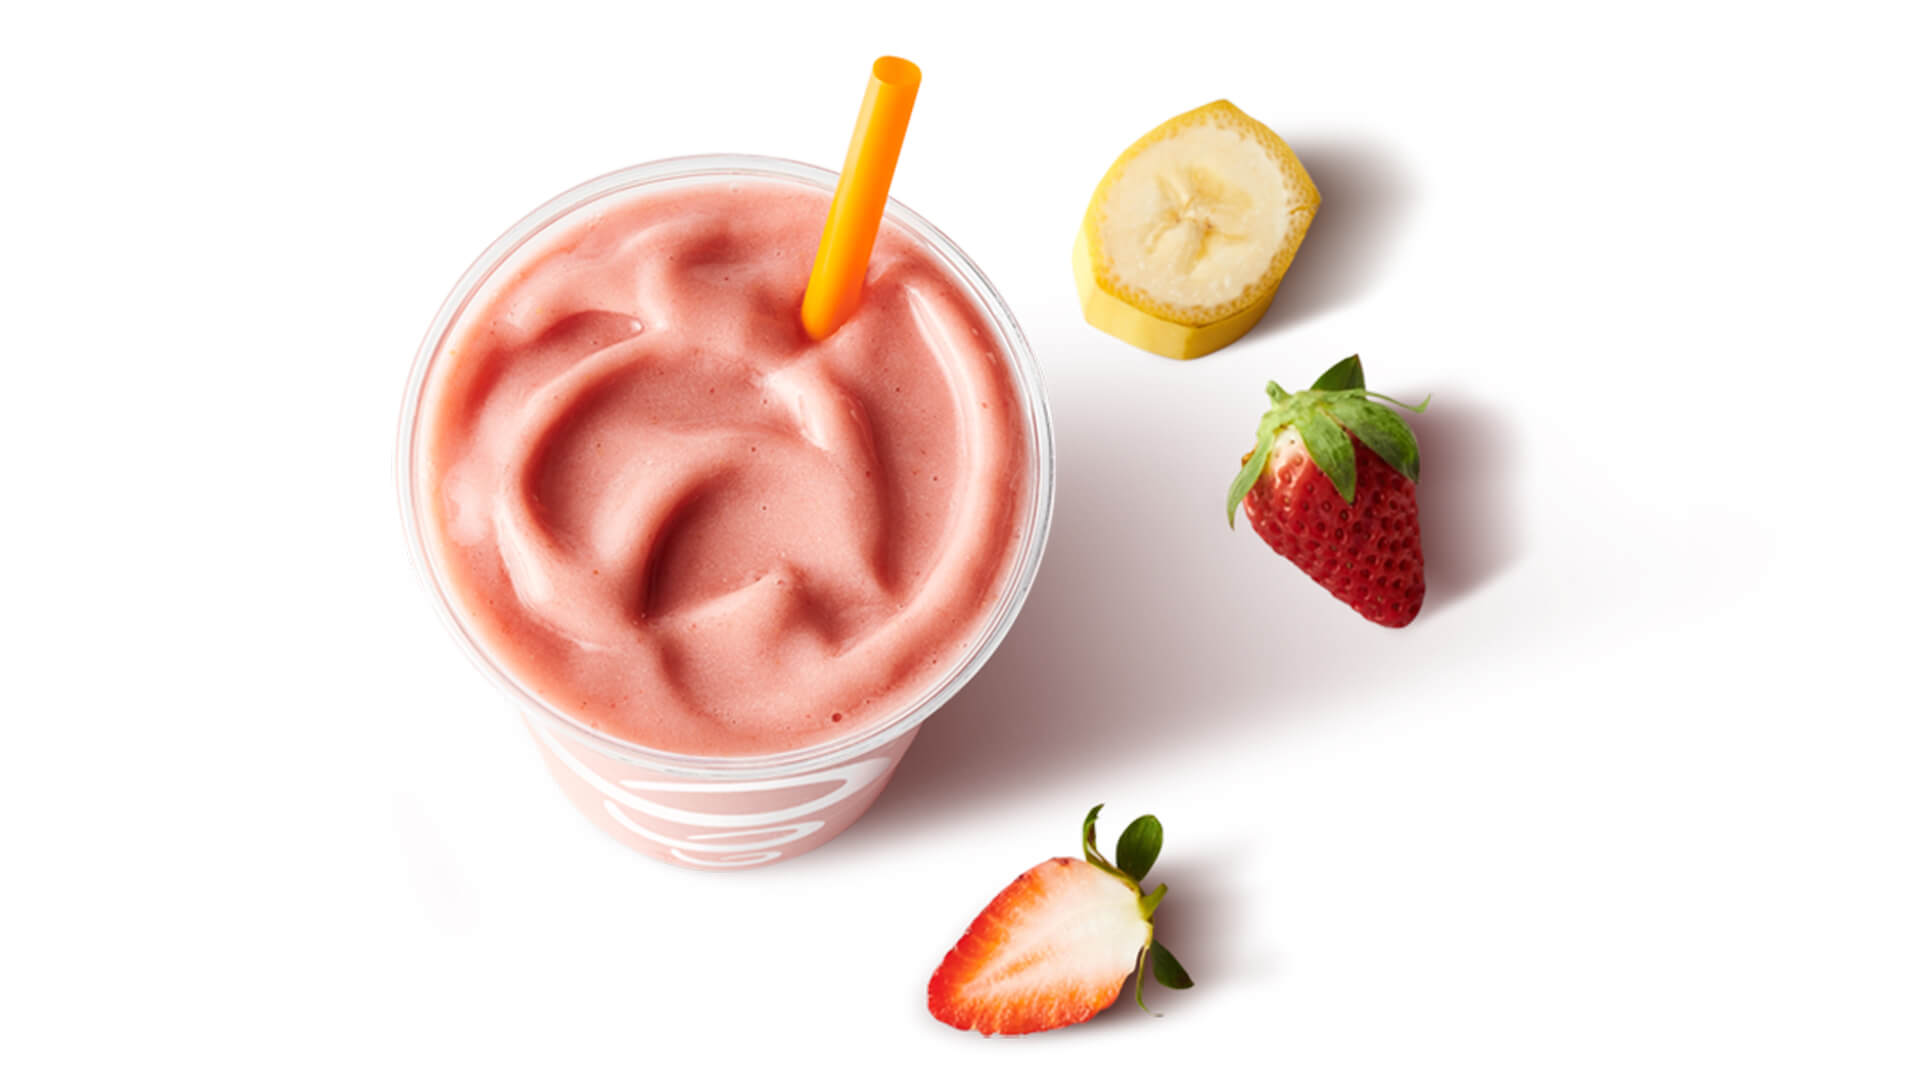 jamba juice strawberry banana smoothie